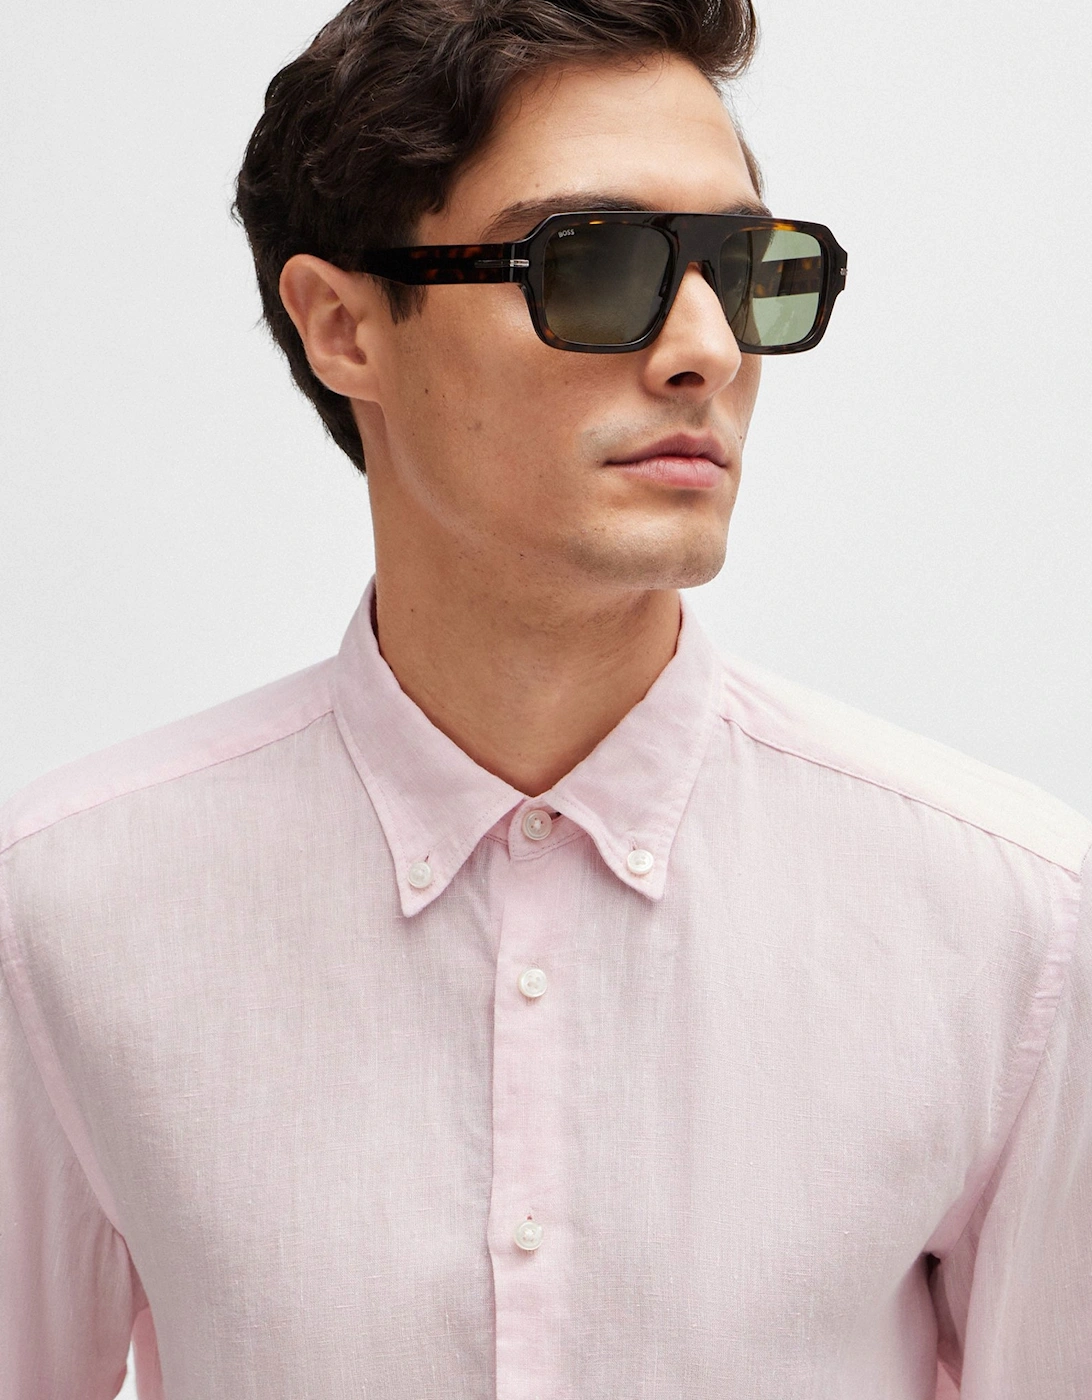 Boss S-liam-s-bd-c1-242 Long Sleeved Shirt Light Pastel Pink